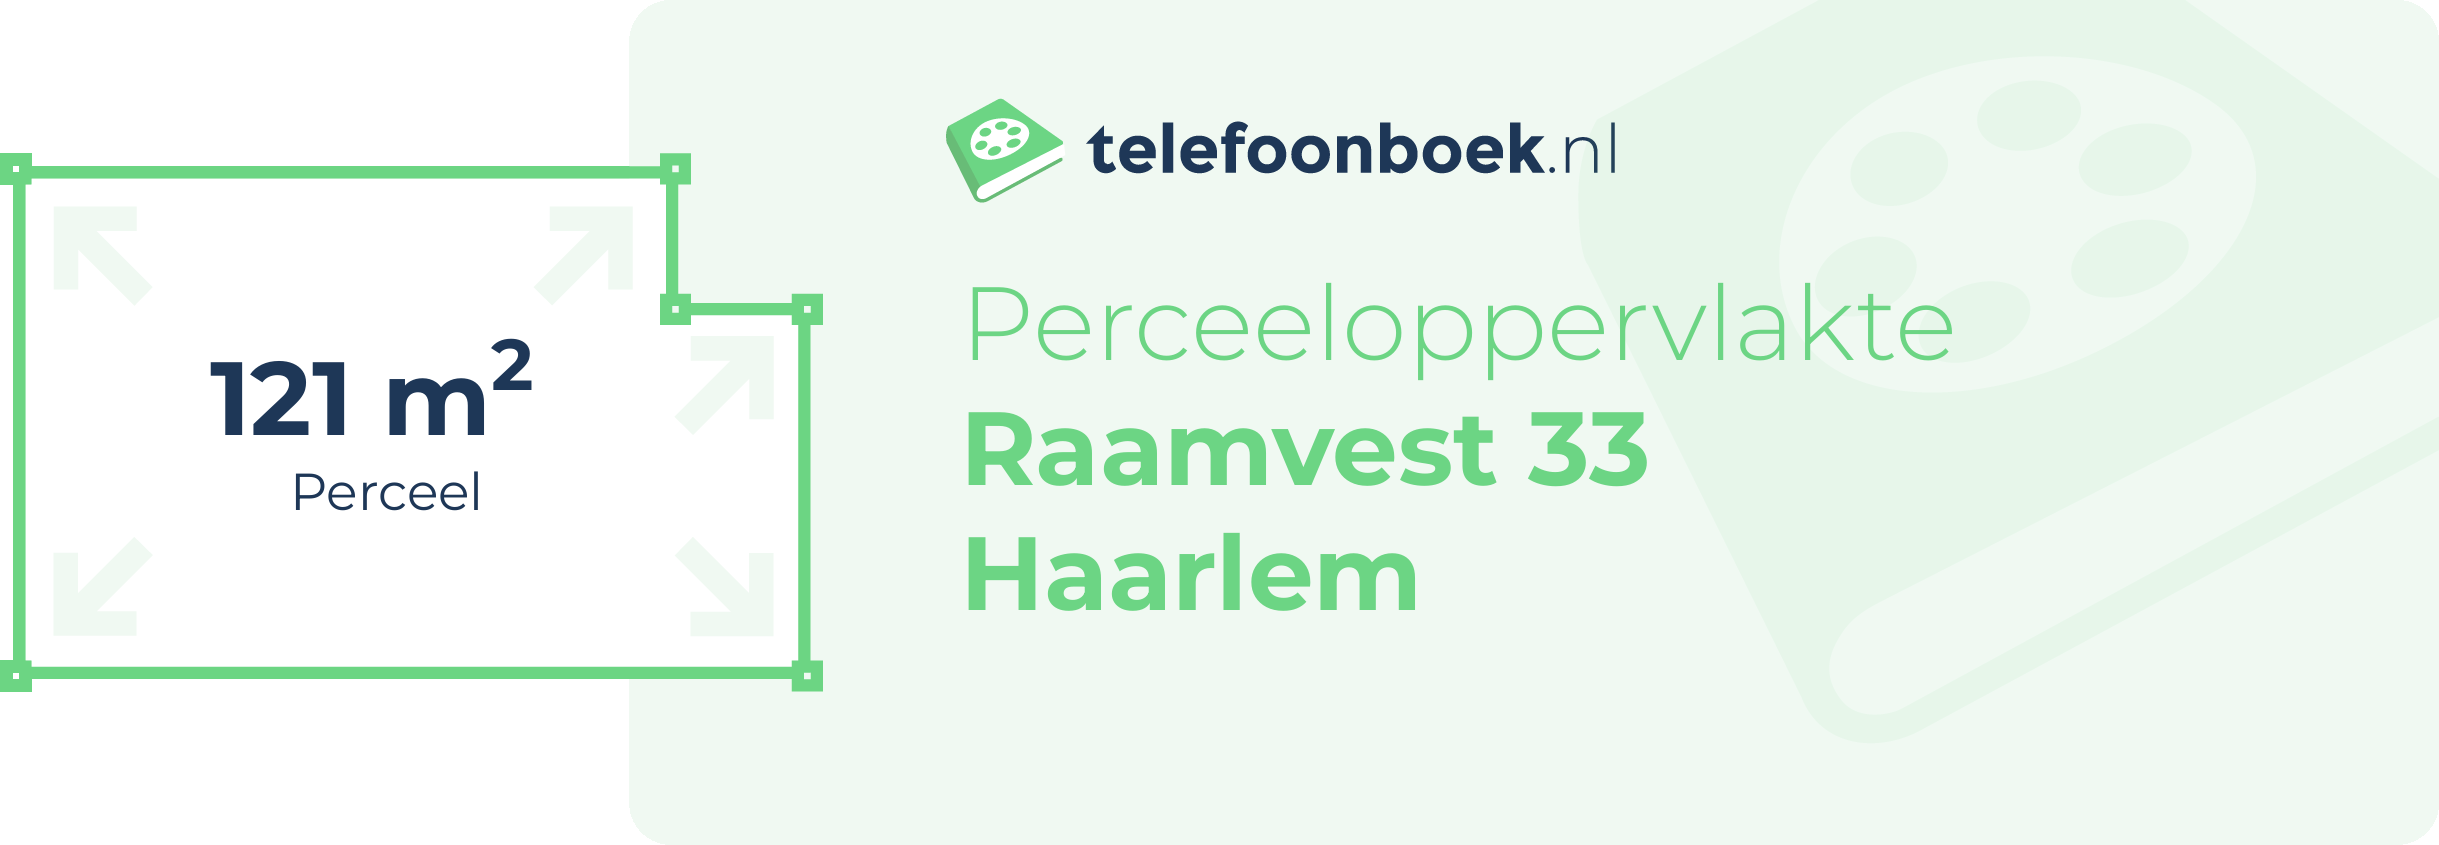 Perceeloppervlakte Raamvest 33 Haarlem